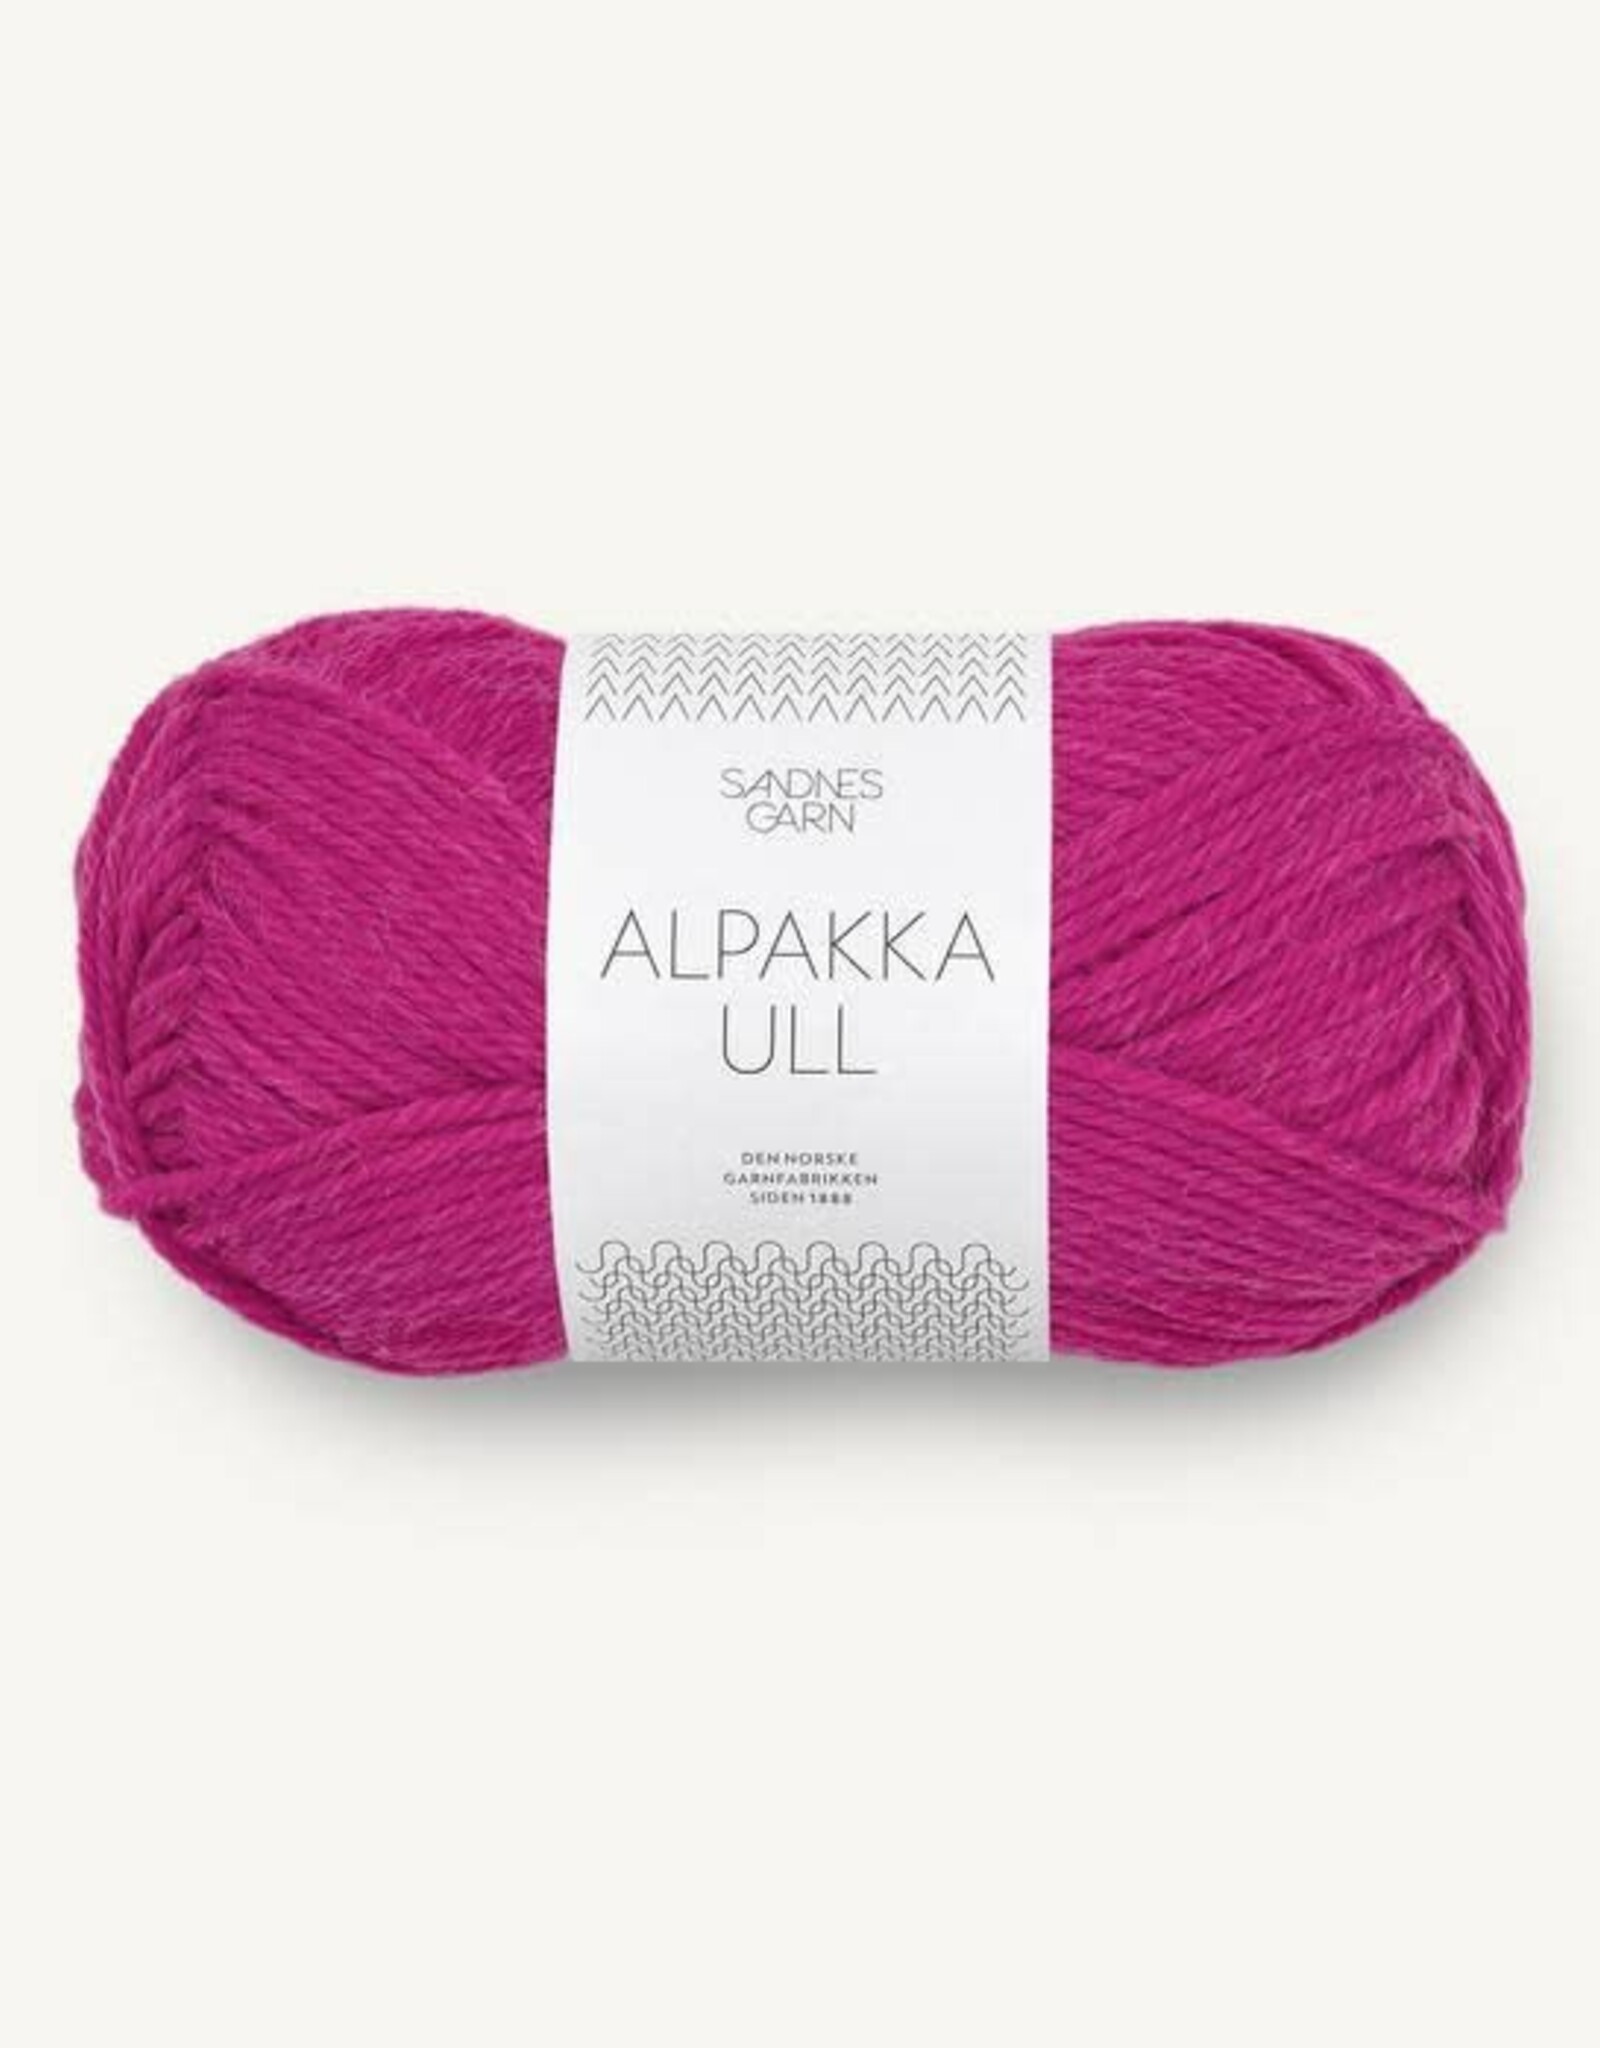 Sandnes Garn Alpakka Ull 4600 jazzy pink